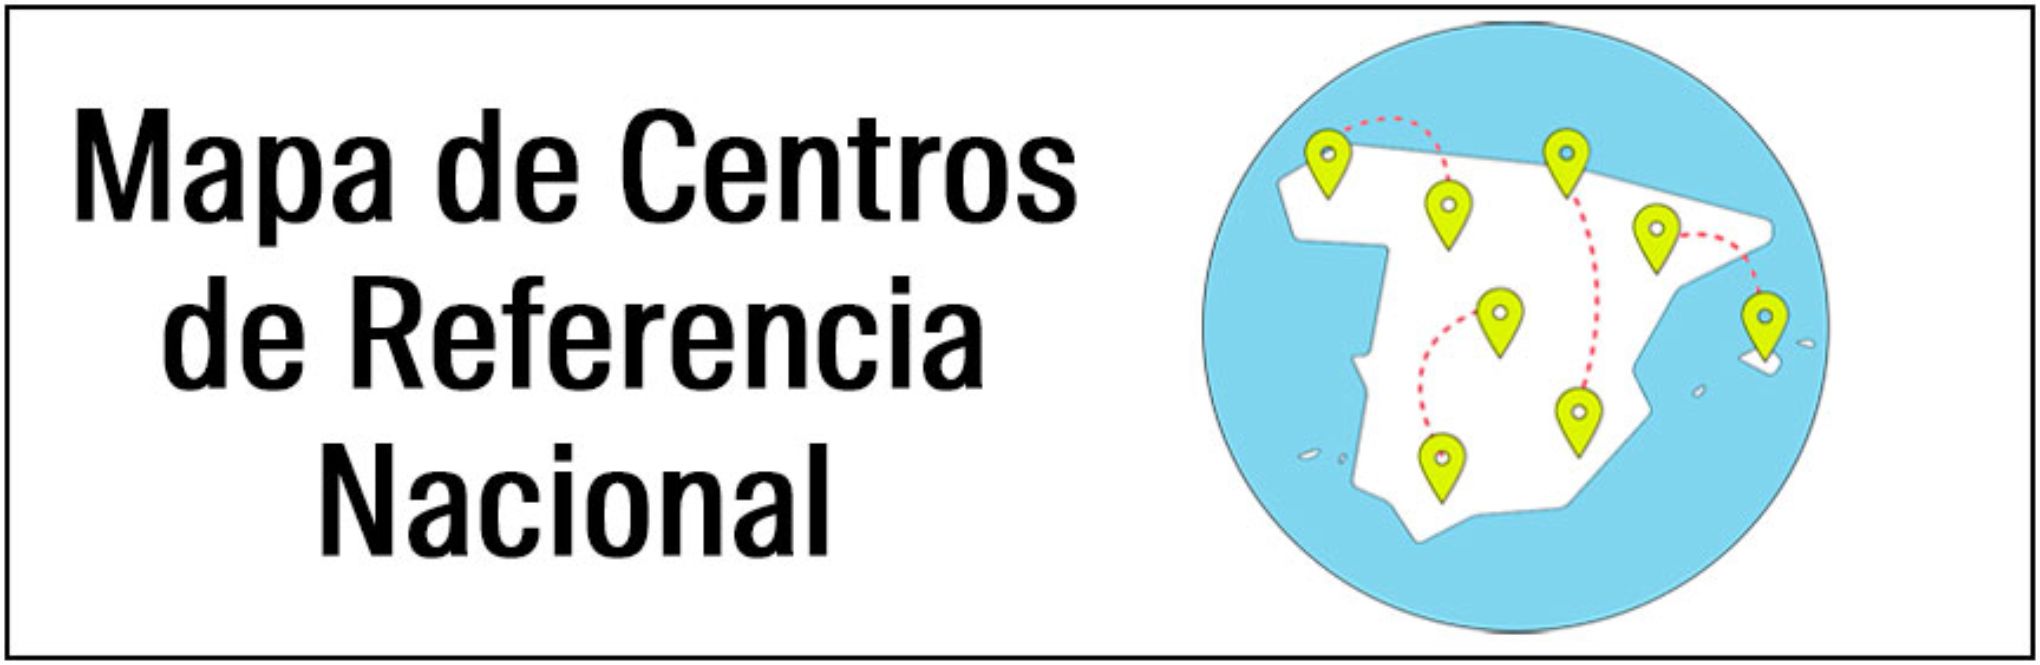 Mapa de Centros de Referencia Nacional